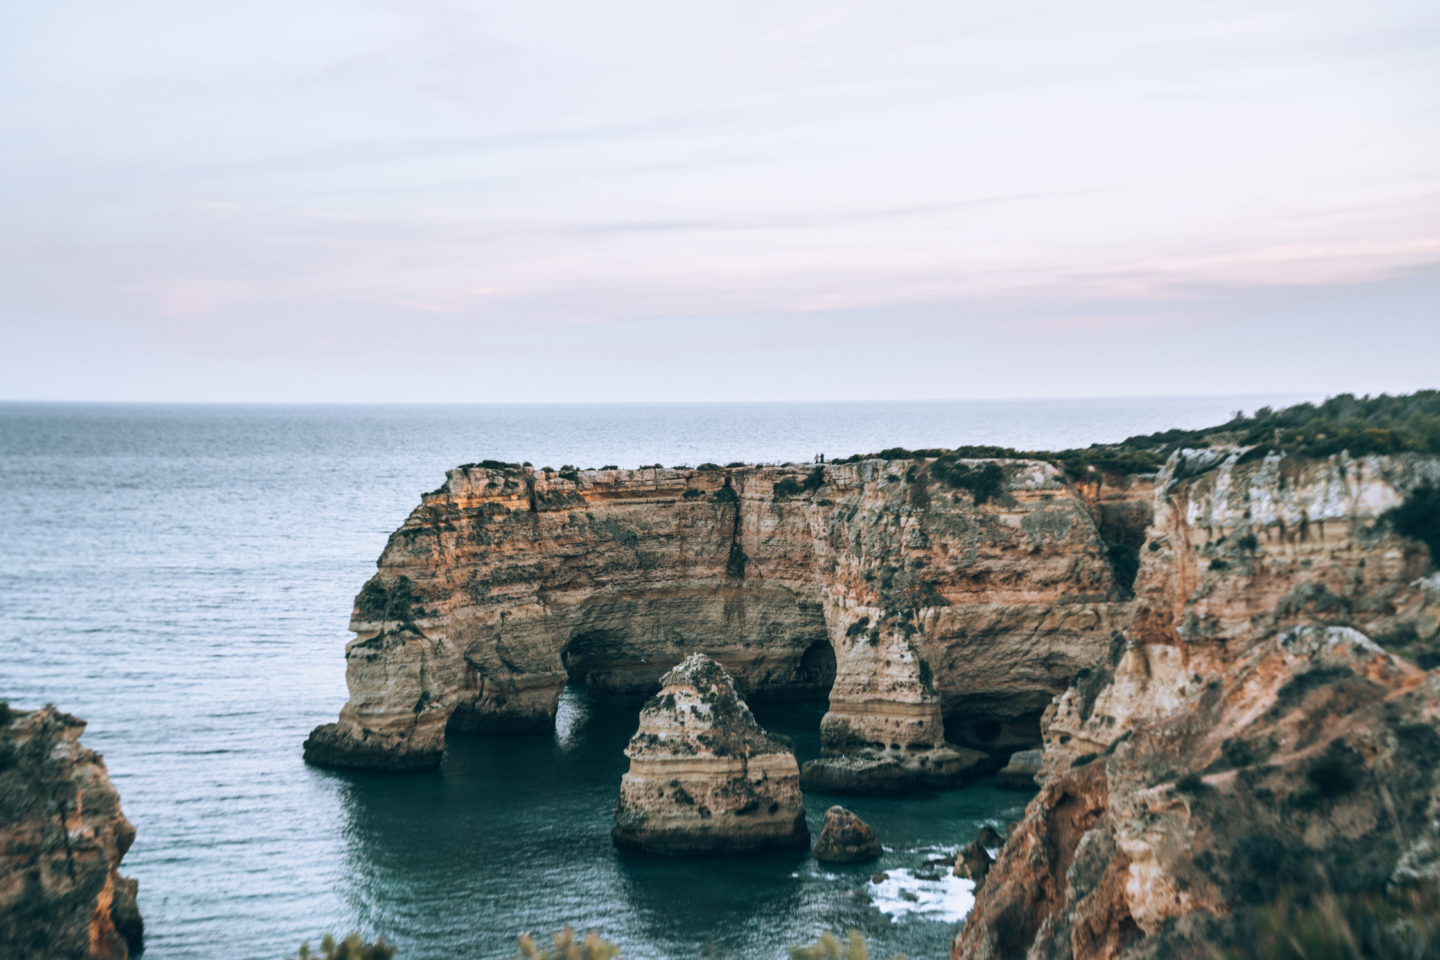 Image of Praia da Marinha, Algarve Beaches, Cliffs of Algarve, Portugal. Algarve Travel Guide 